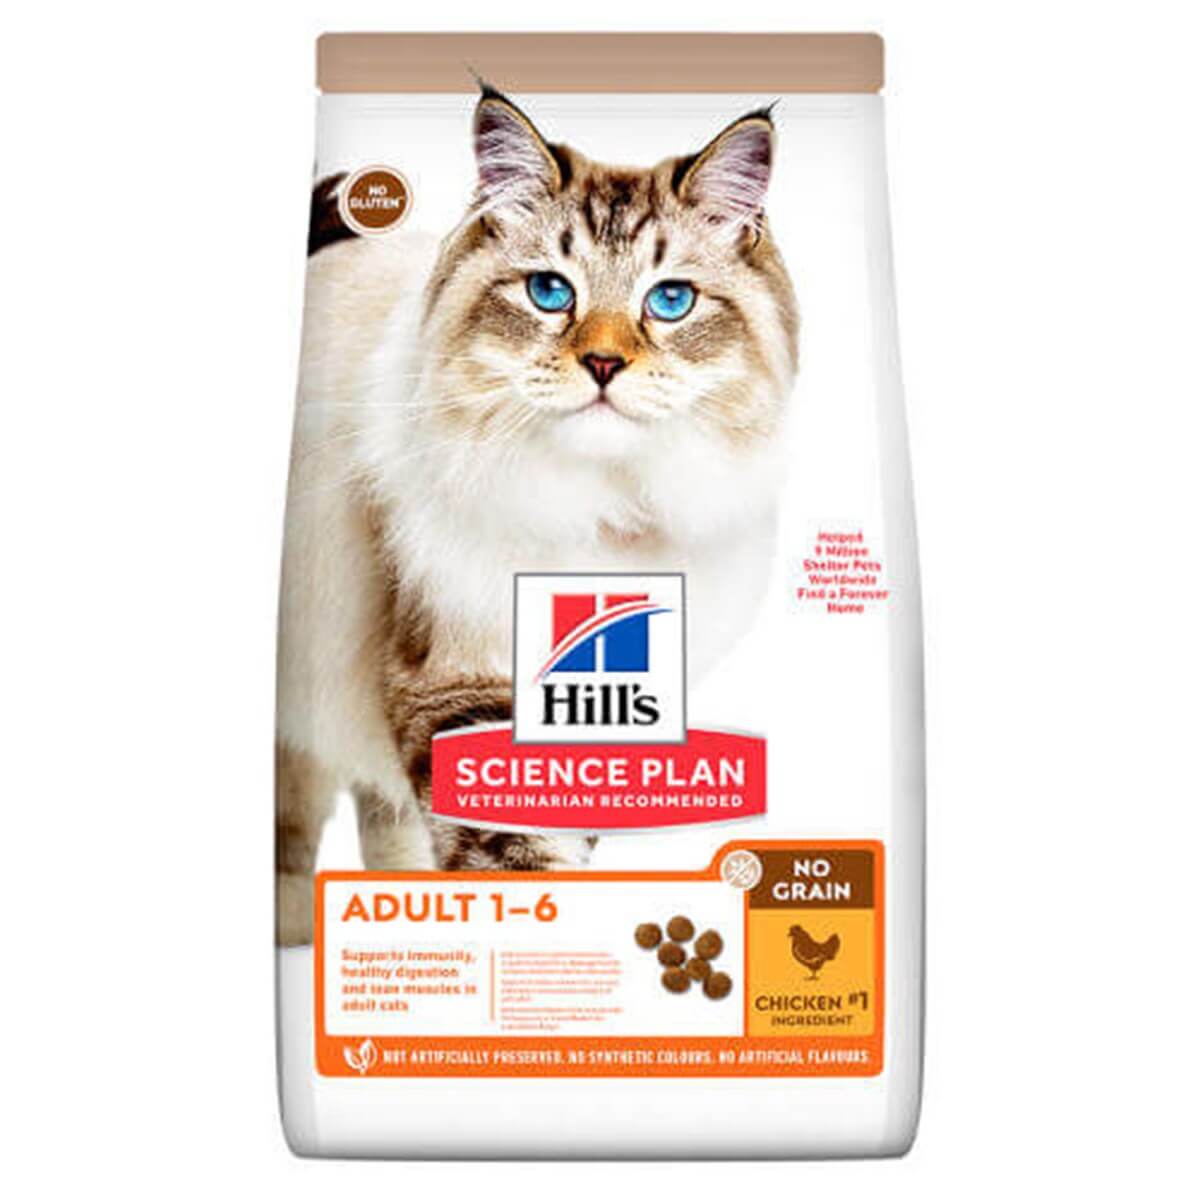 Hills Tahılsız Tavuklu Yetişkin Kedi Maması 1.5 Kg